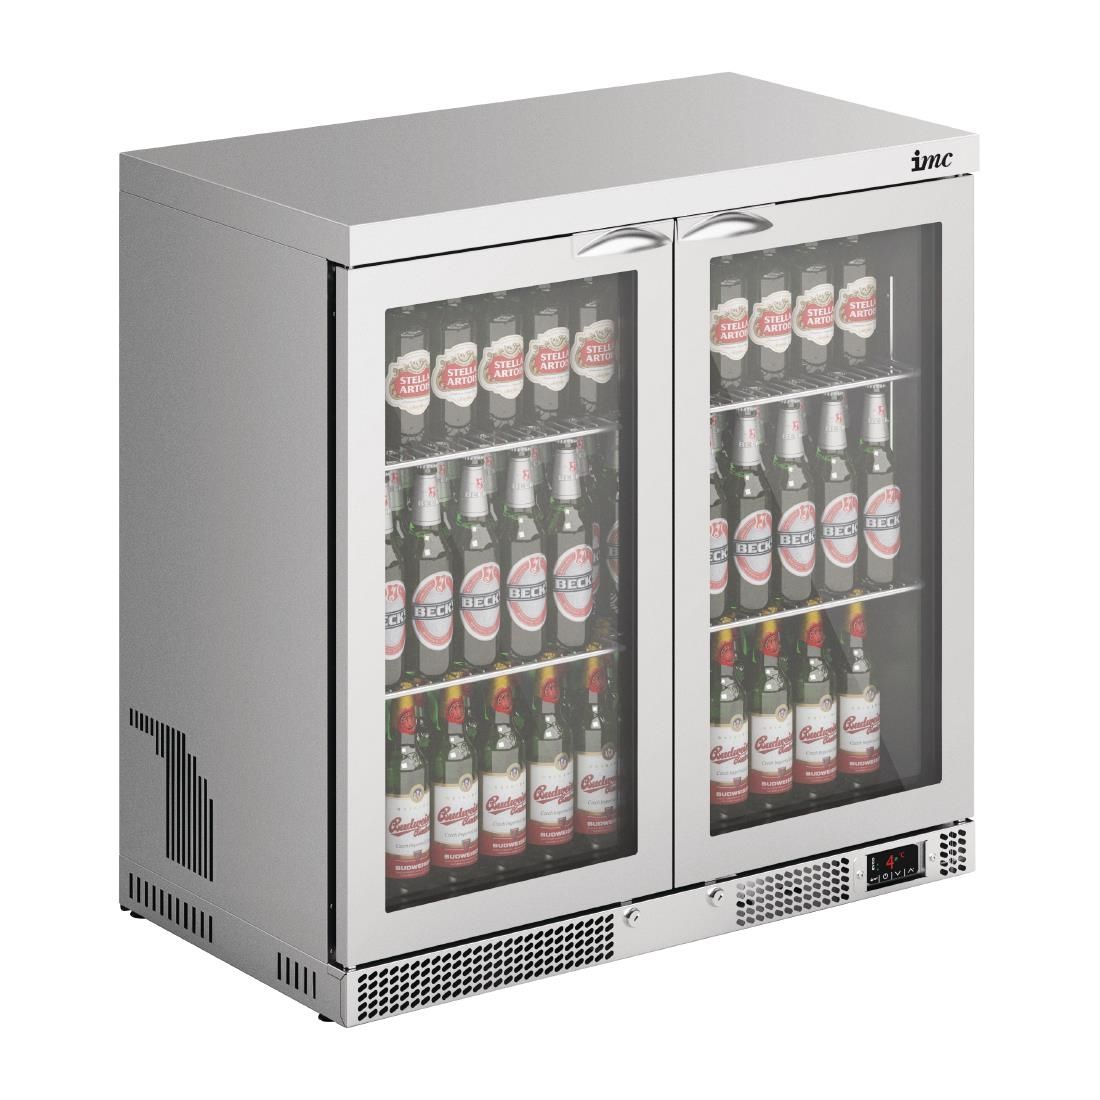 IMC Mistral M90 Double Door Bottle Cooler 214Ltr F77/250 JD Catering Equipment Solutions Ltd